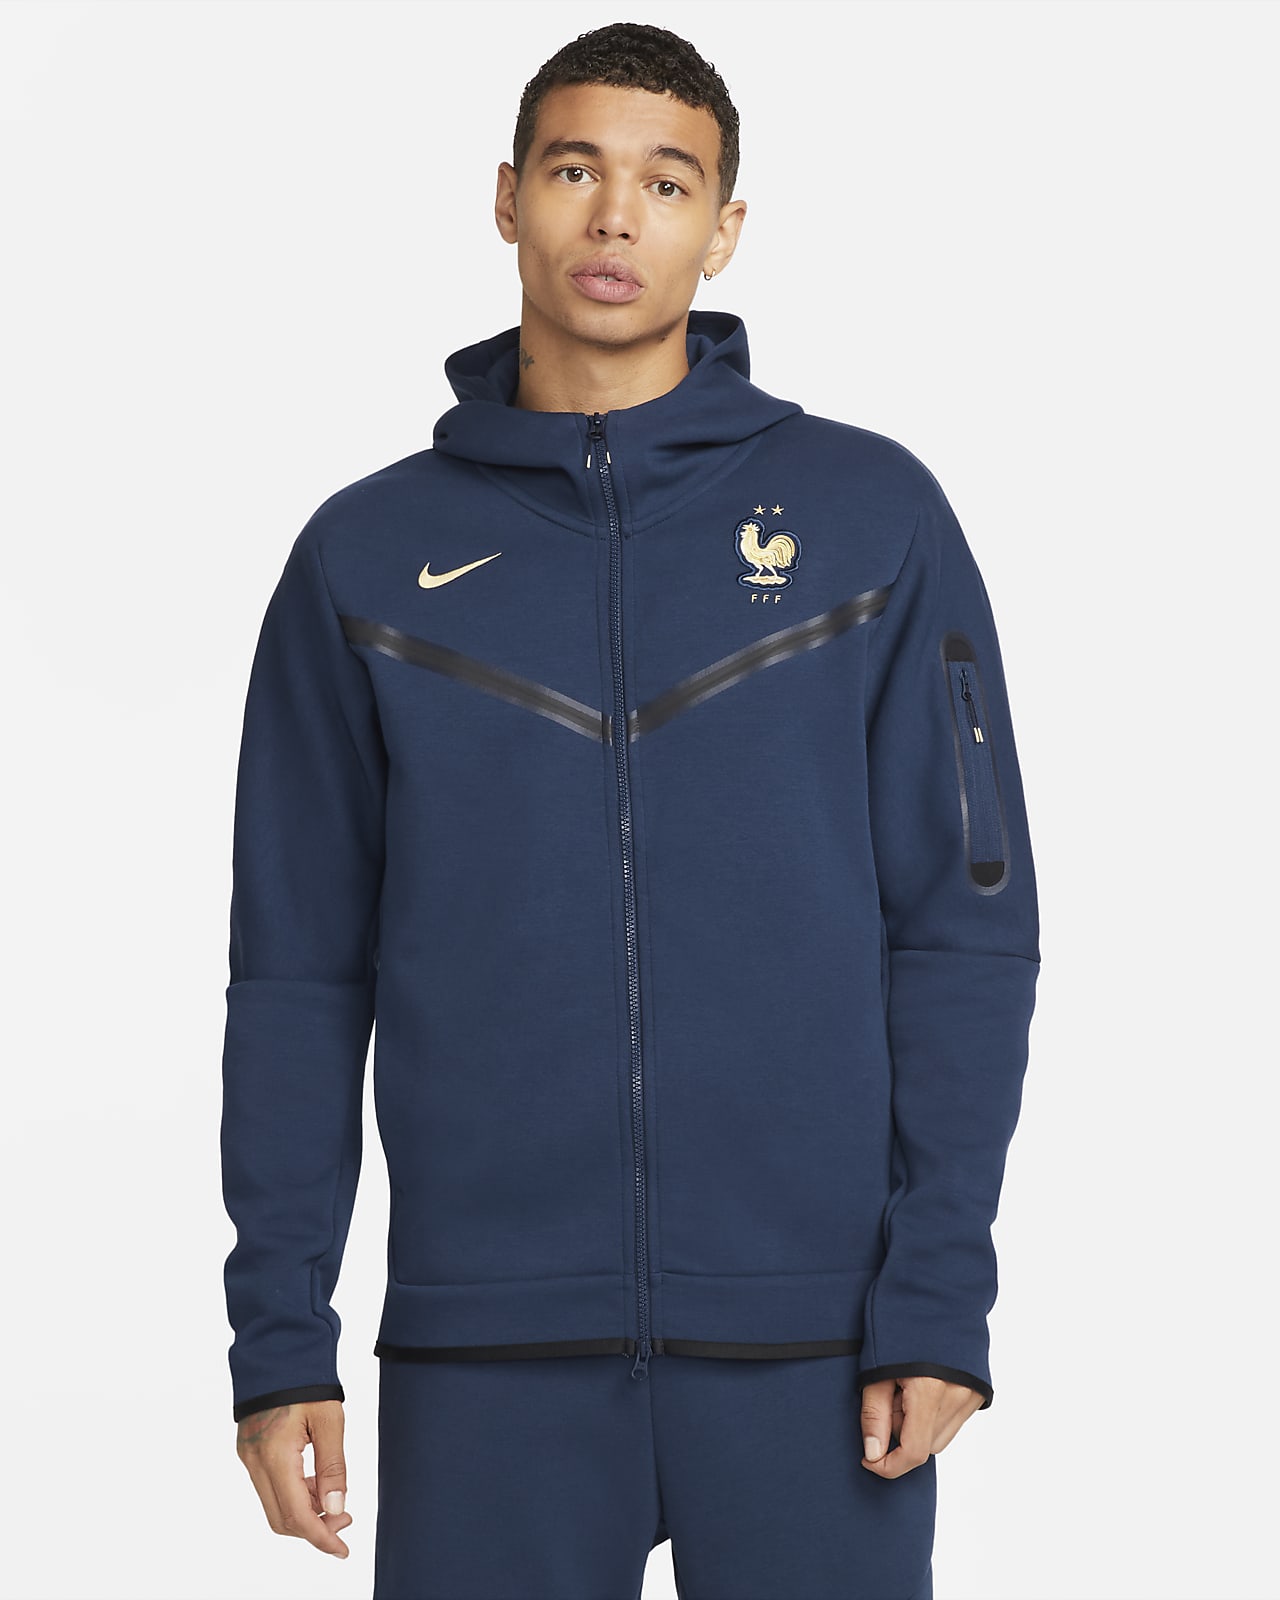 France Men's Nike Full-Zip Tech Fleece Hoodie.